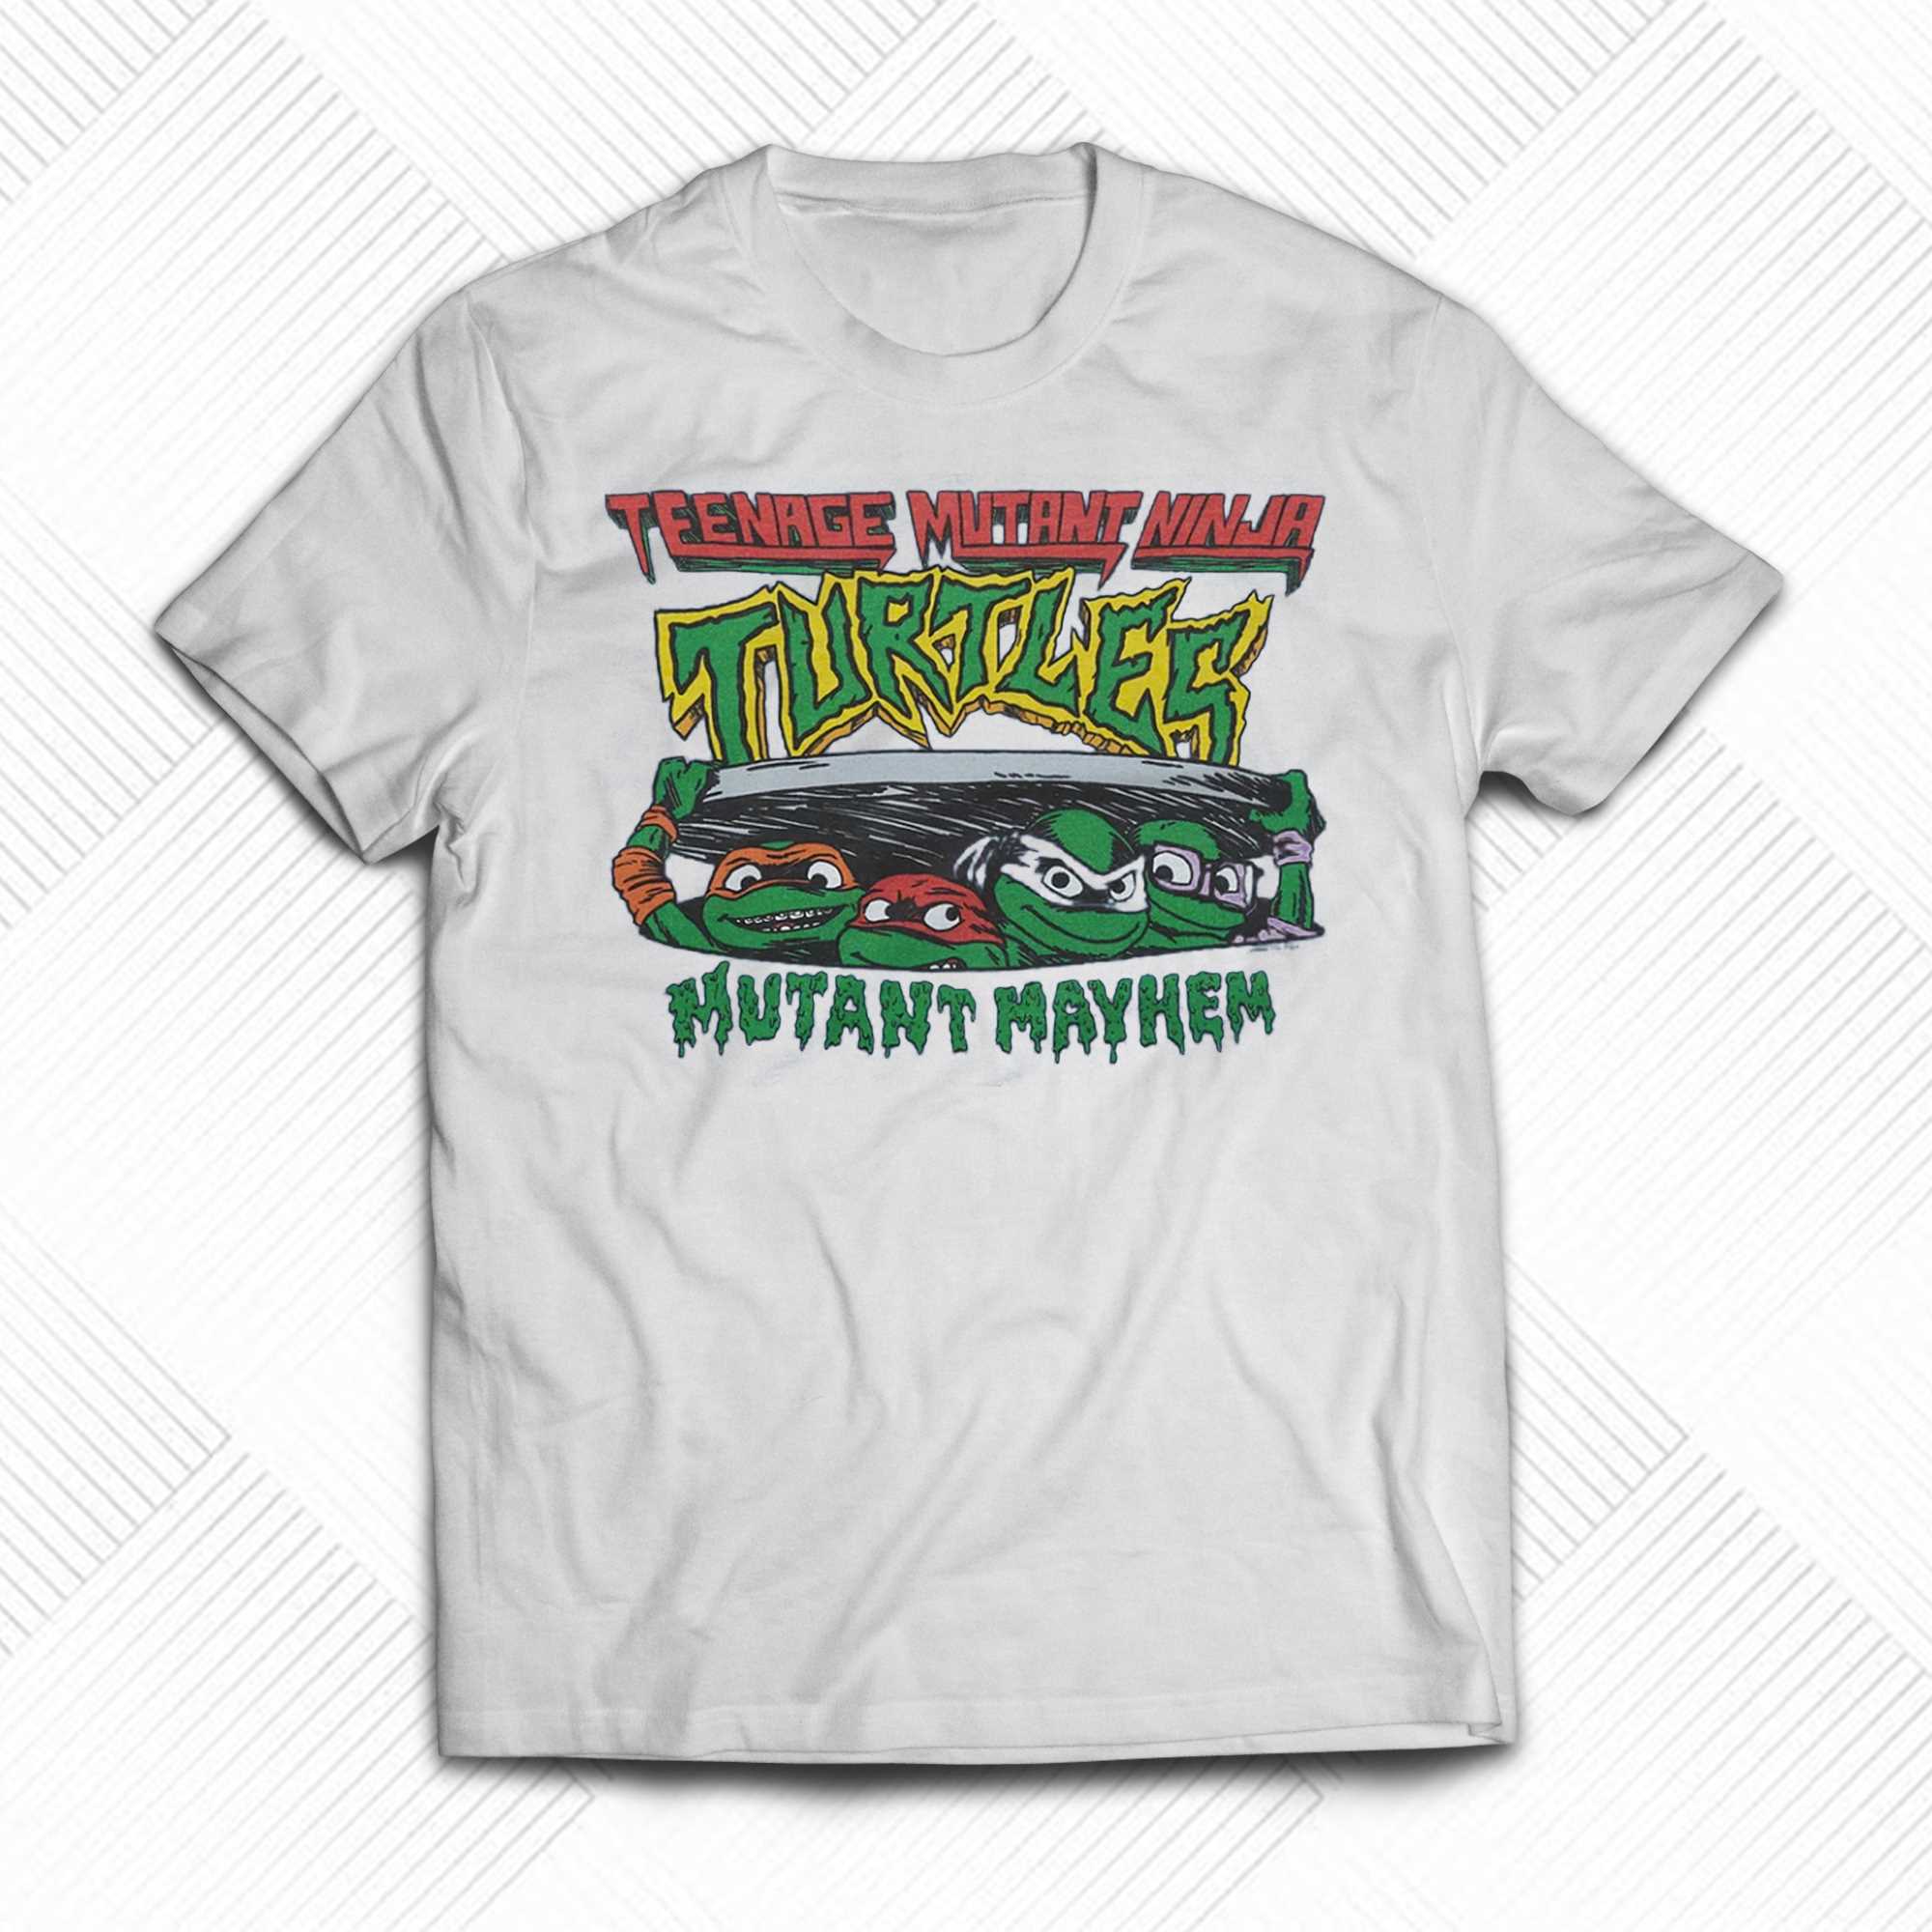 Retro TMNT Shirt - 90s Cartoon Inspired Tee - Vintage Ninja